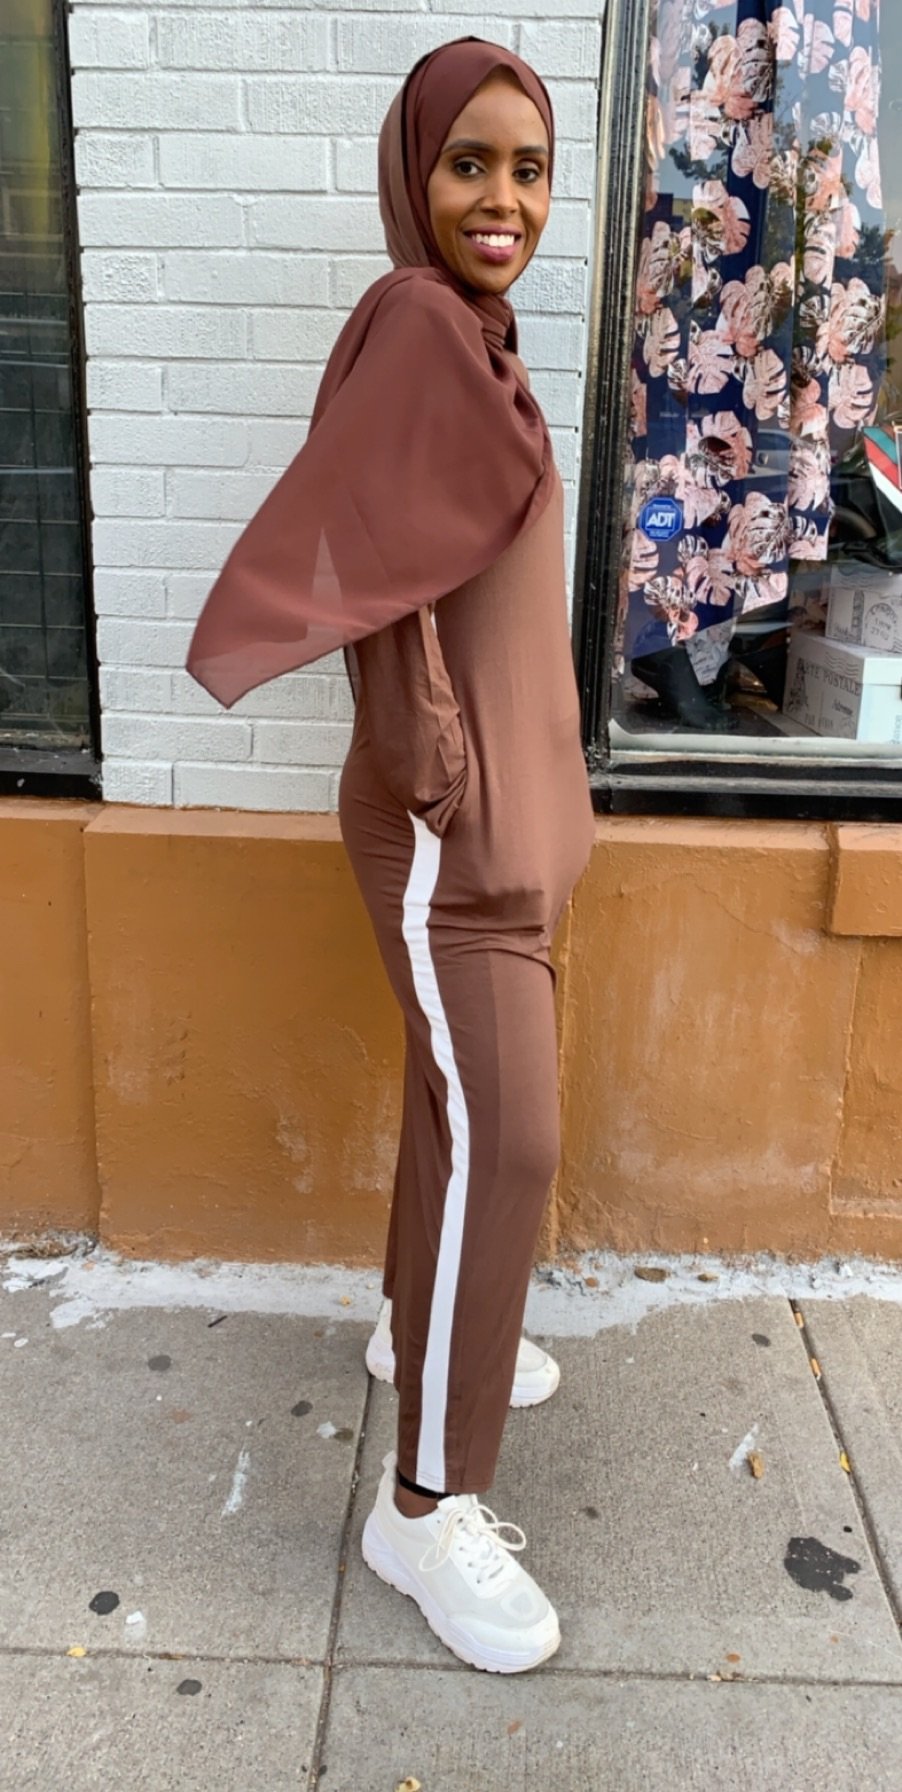 Zizi Boutique Jersey Hoodie Dress XL / Brown